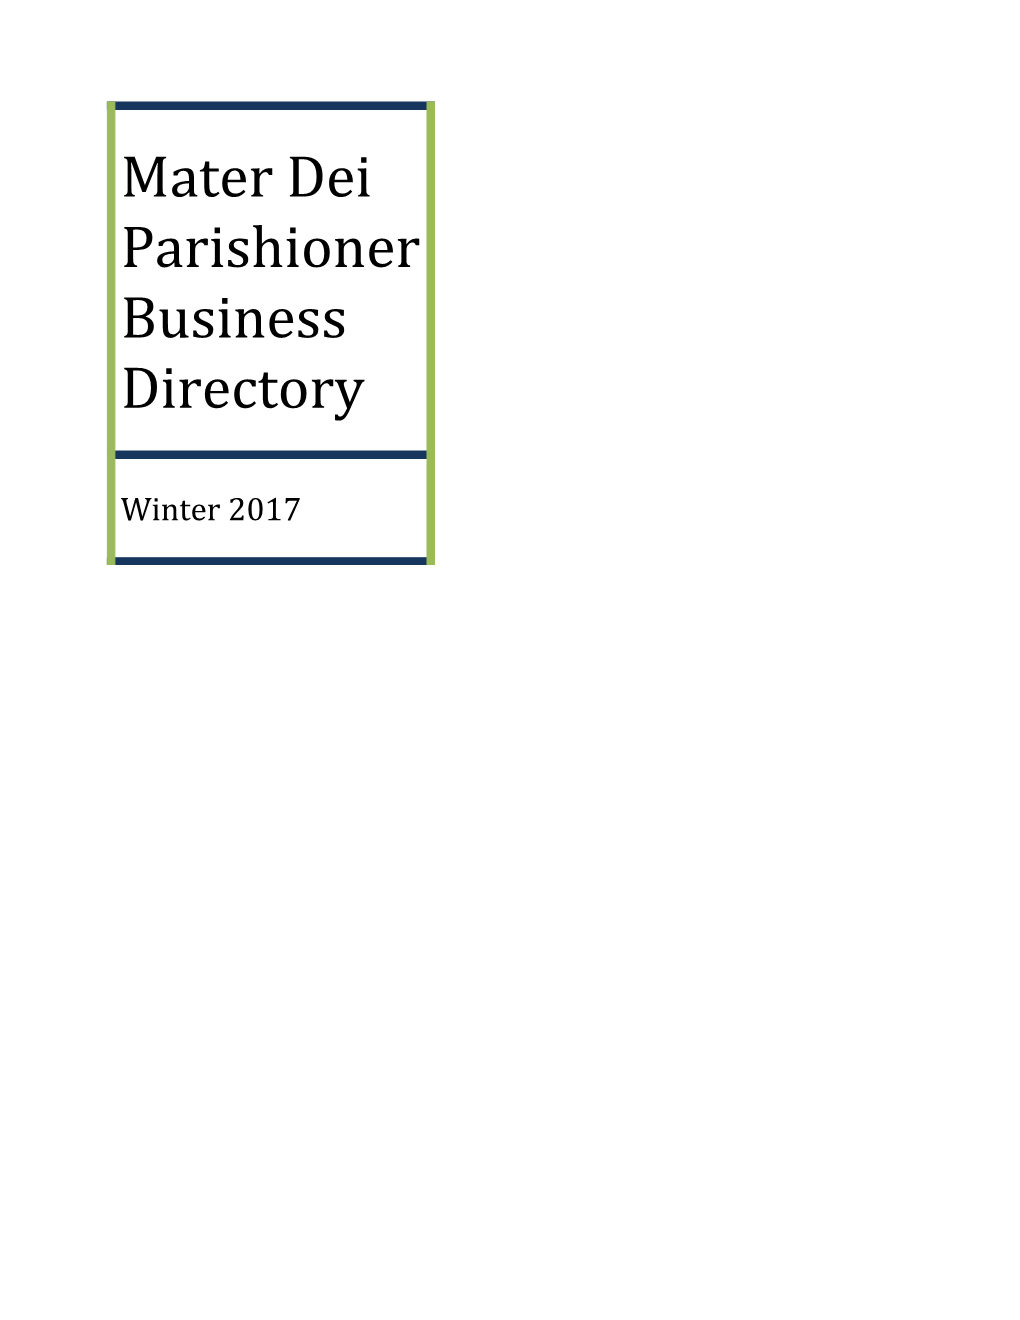 Mater Dei Parishioner Business Directory